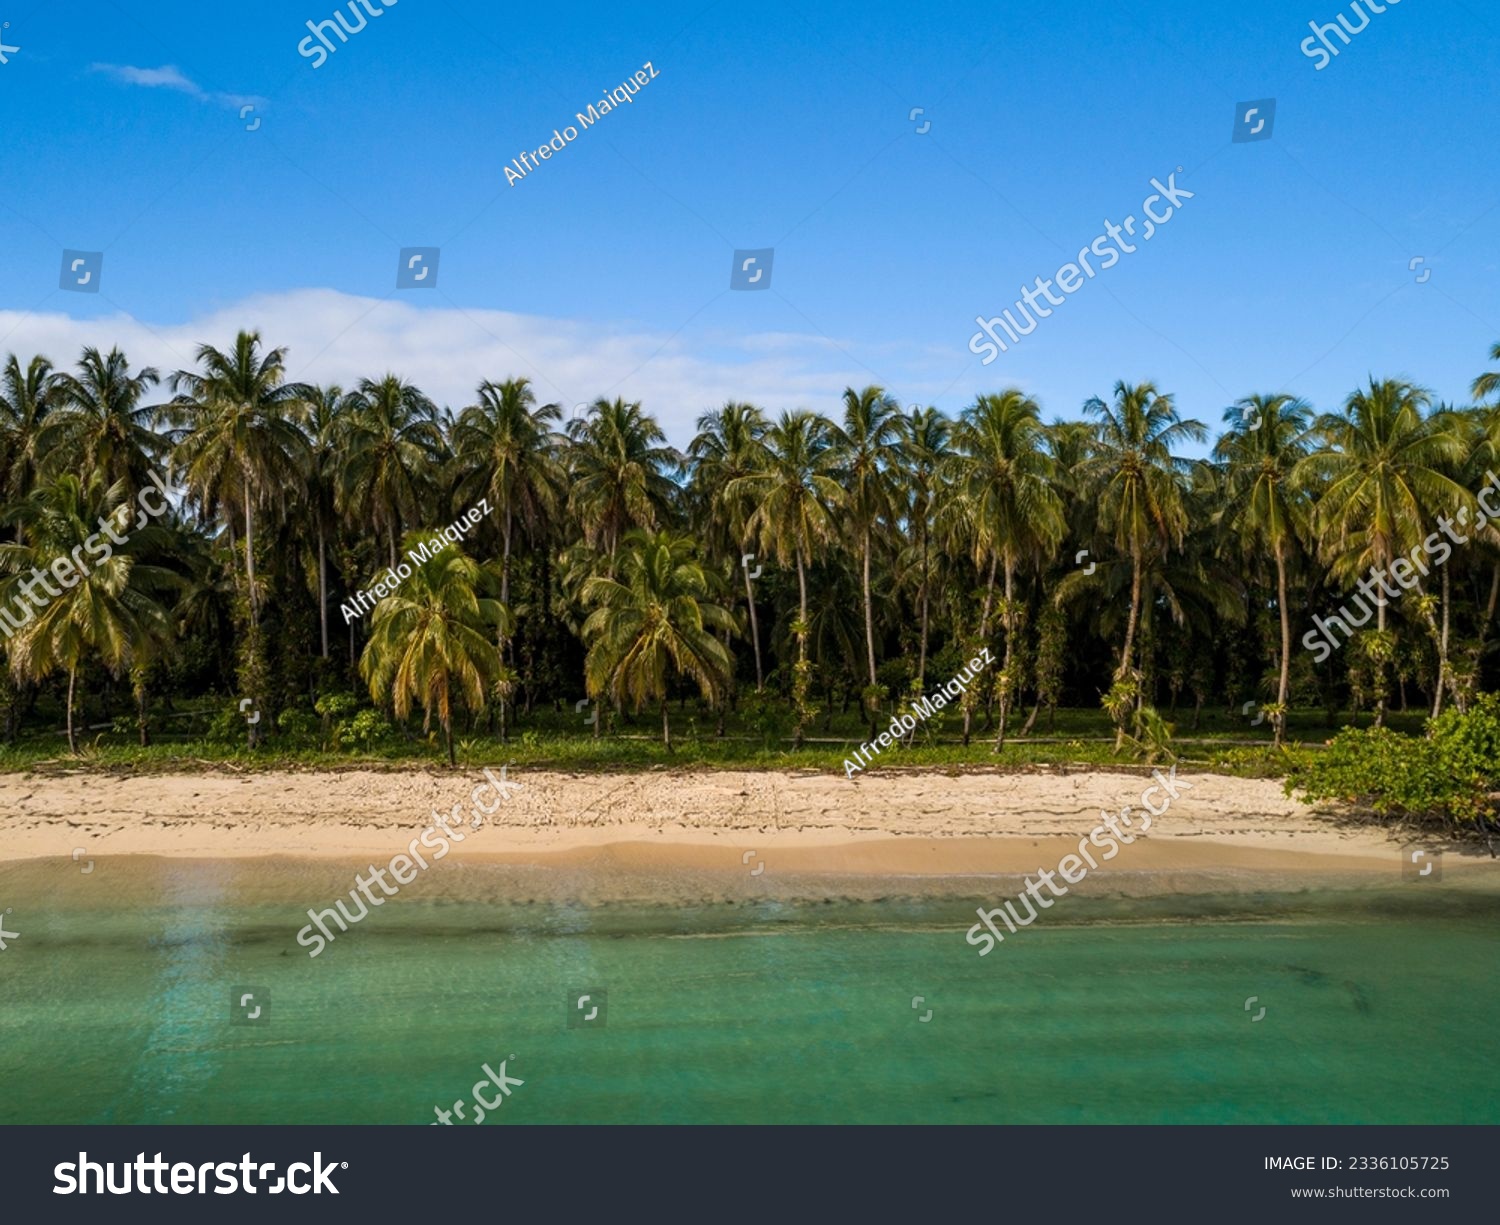 Desert tropical beach. Zapatilla island, Bocas del Toro, Panama - stock photo #2336105725